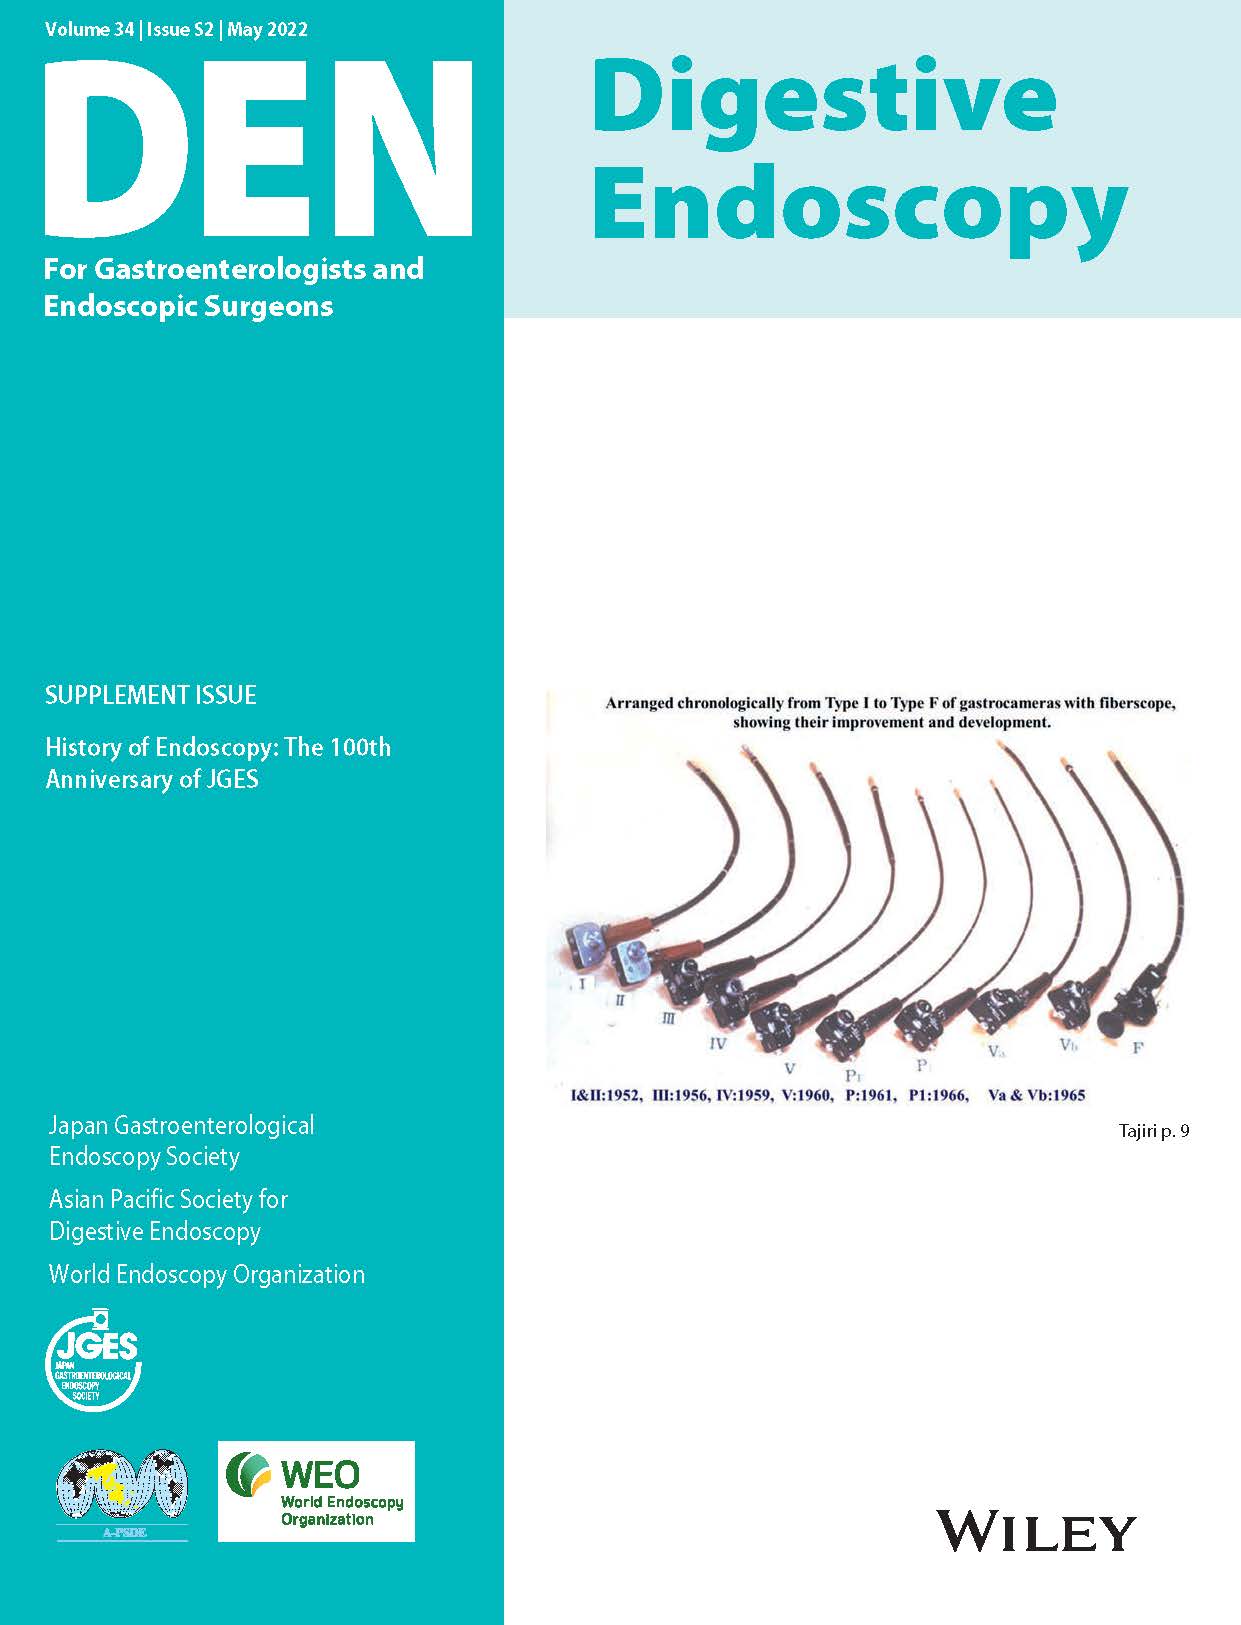 Digestive Endoscopy Volume 34-S2